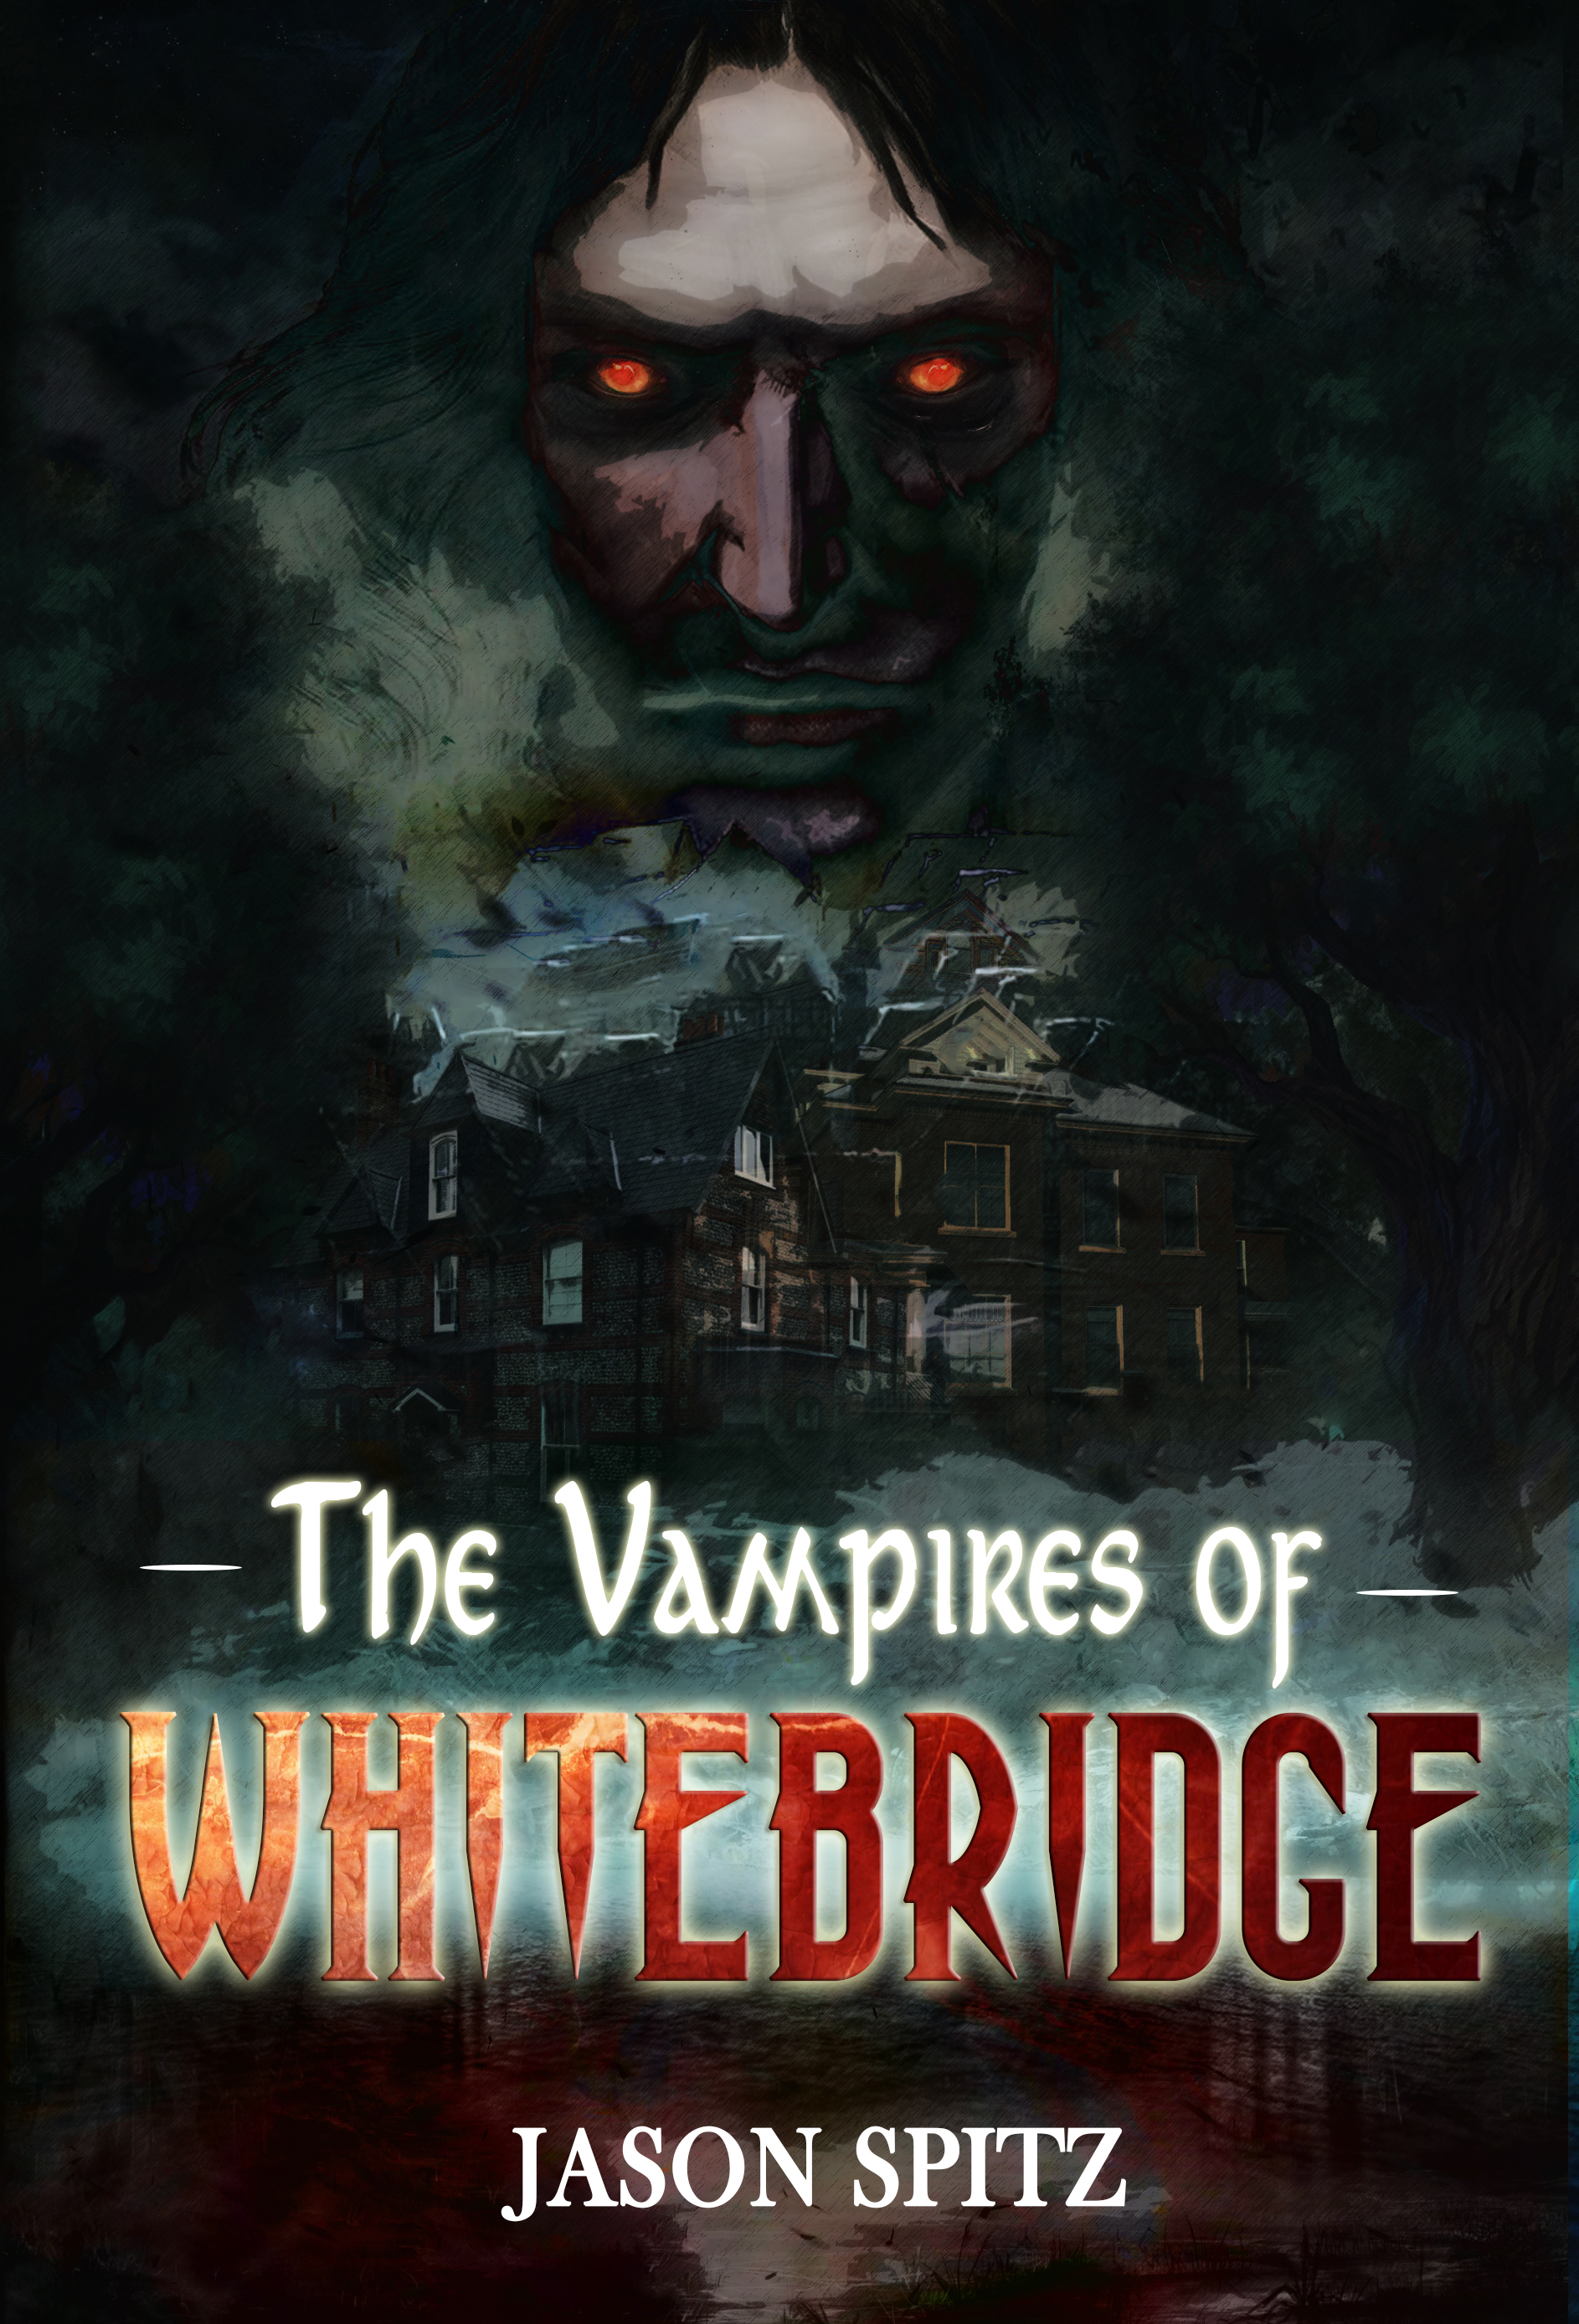 The Vampires of Whitebridge